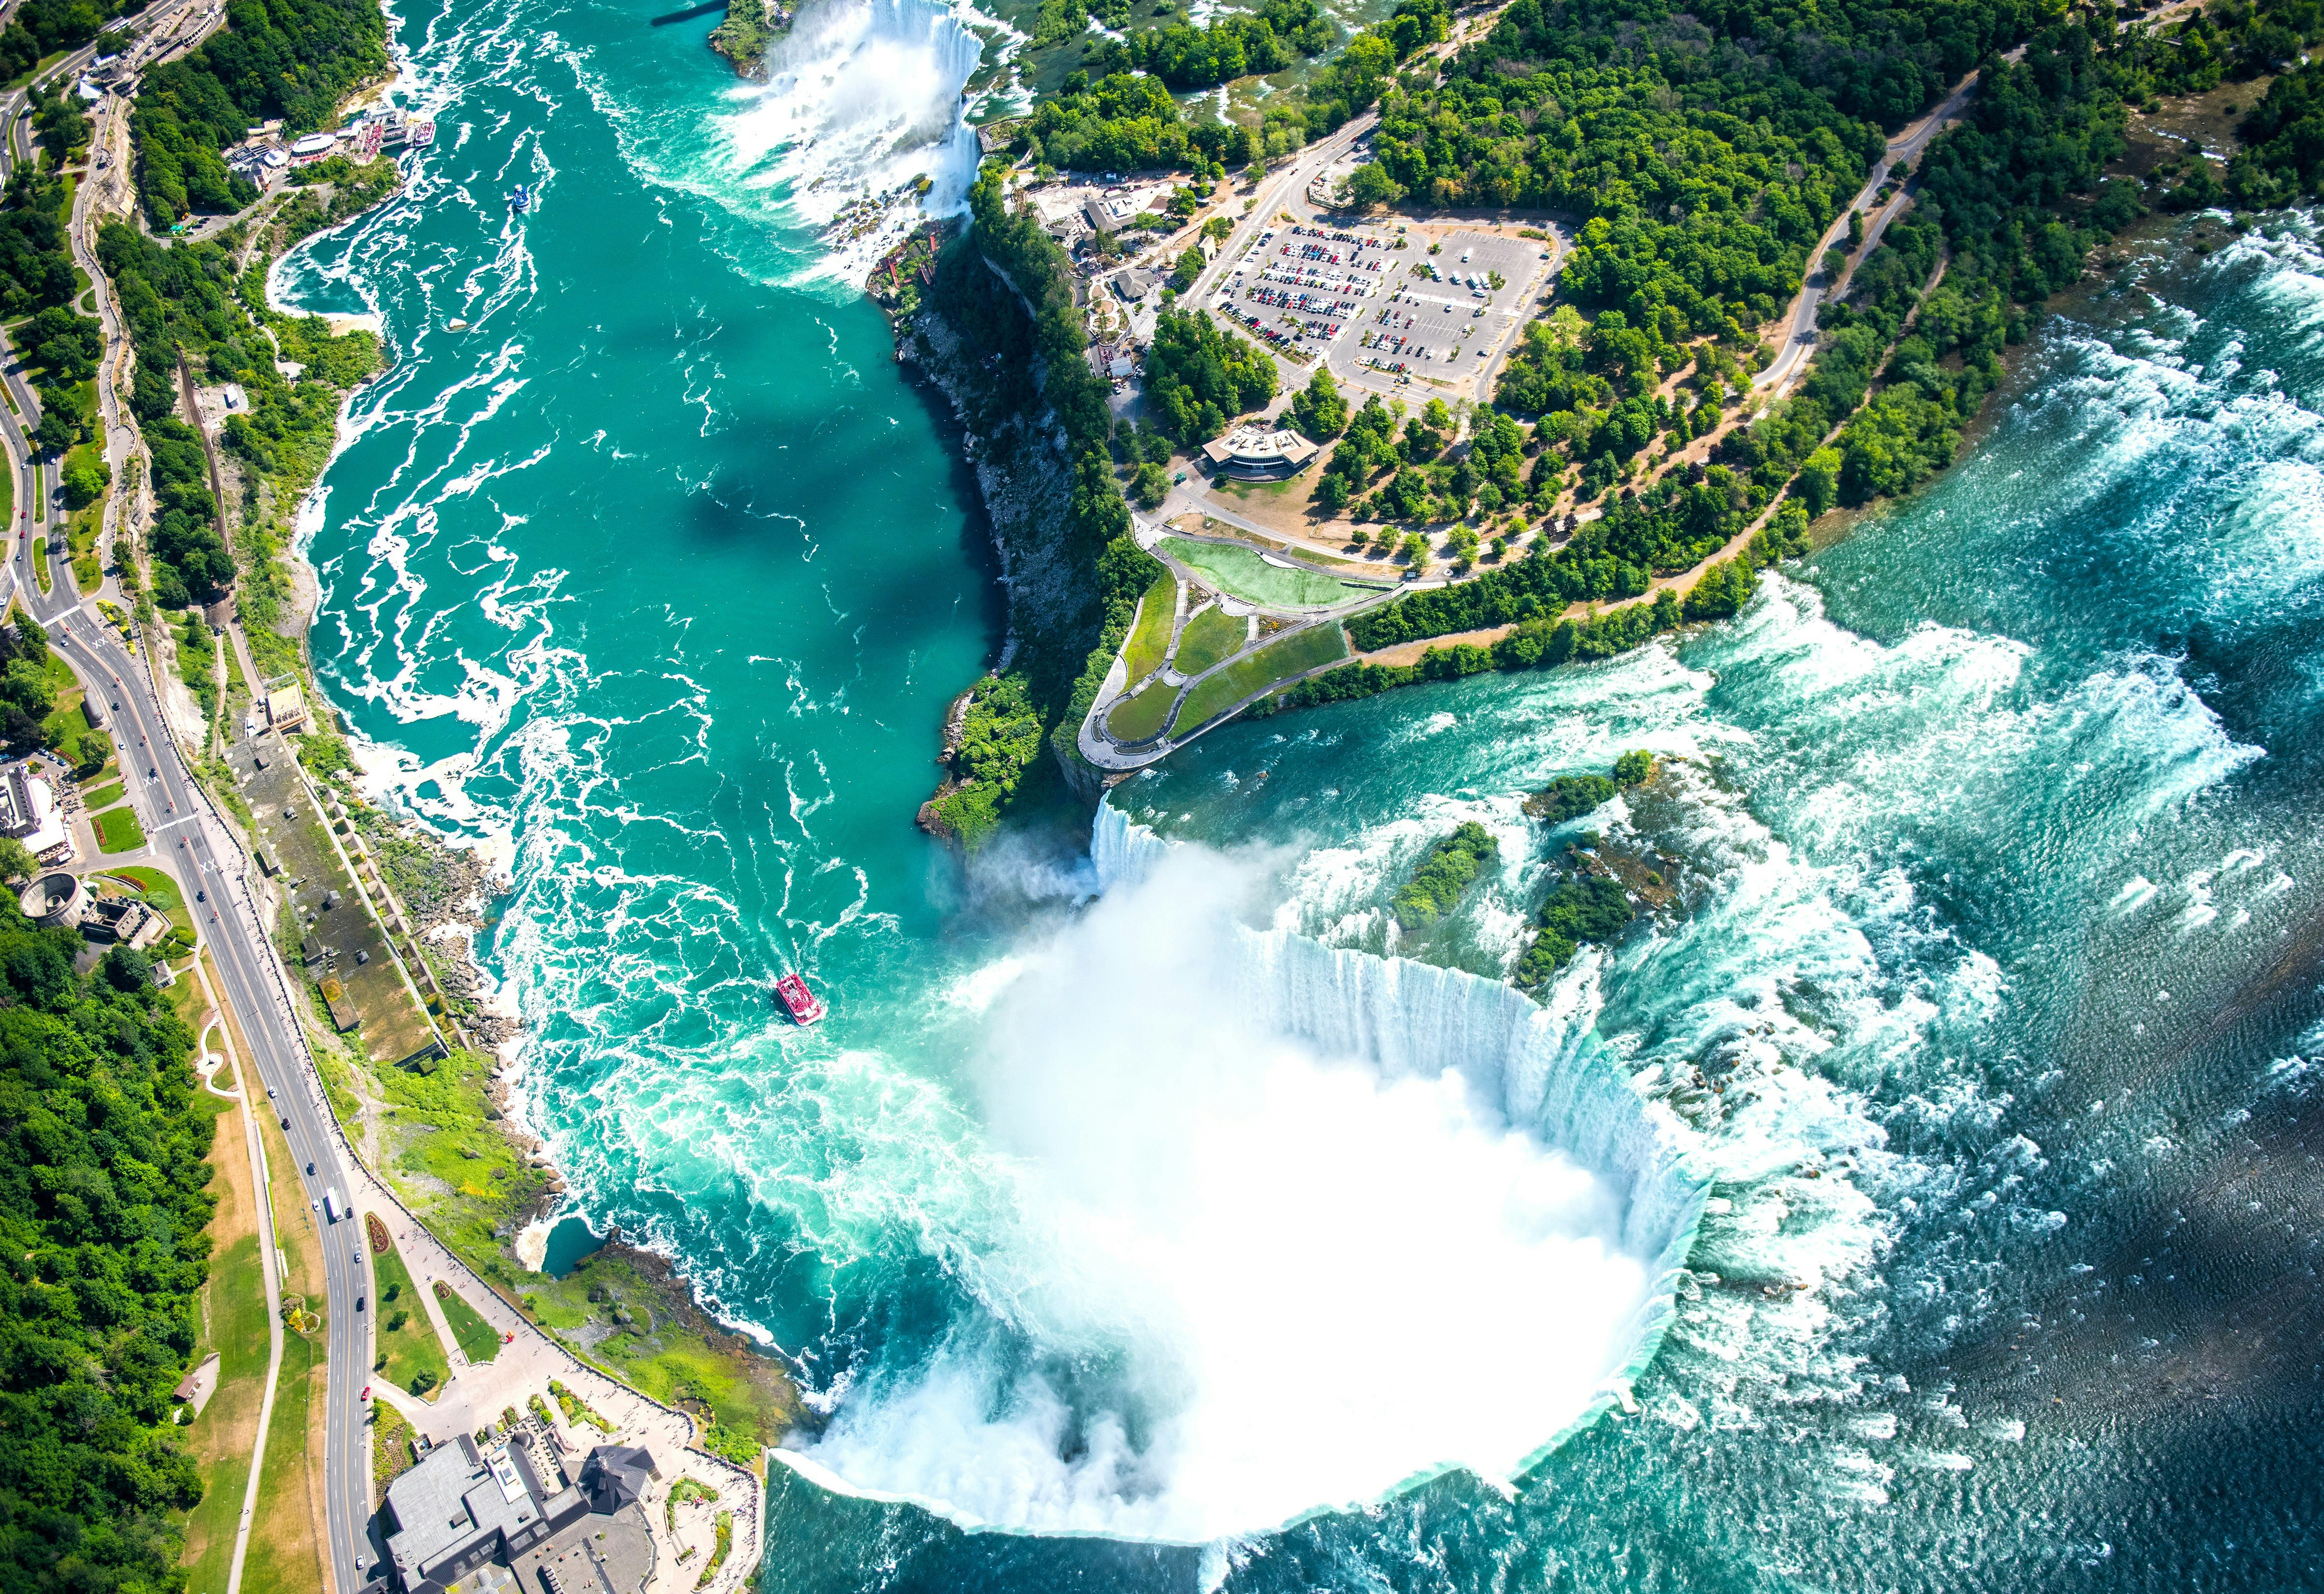 An aerial view of Niagara Falls, a group of three waterfalls at the southern end of Niagara Gorge.